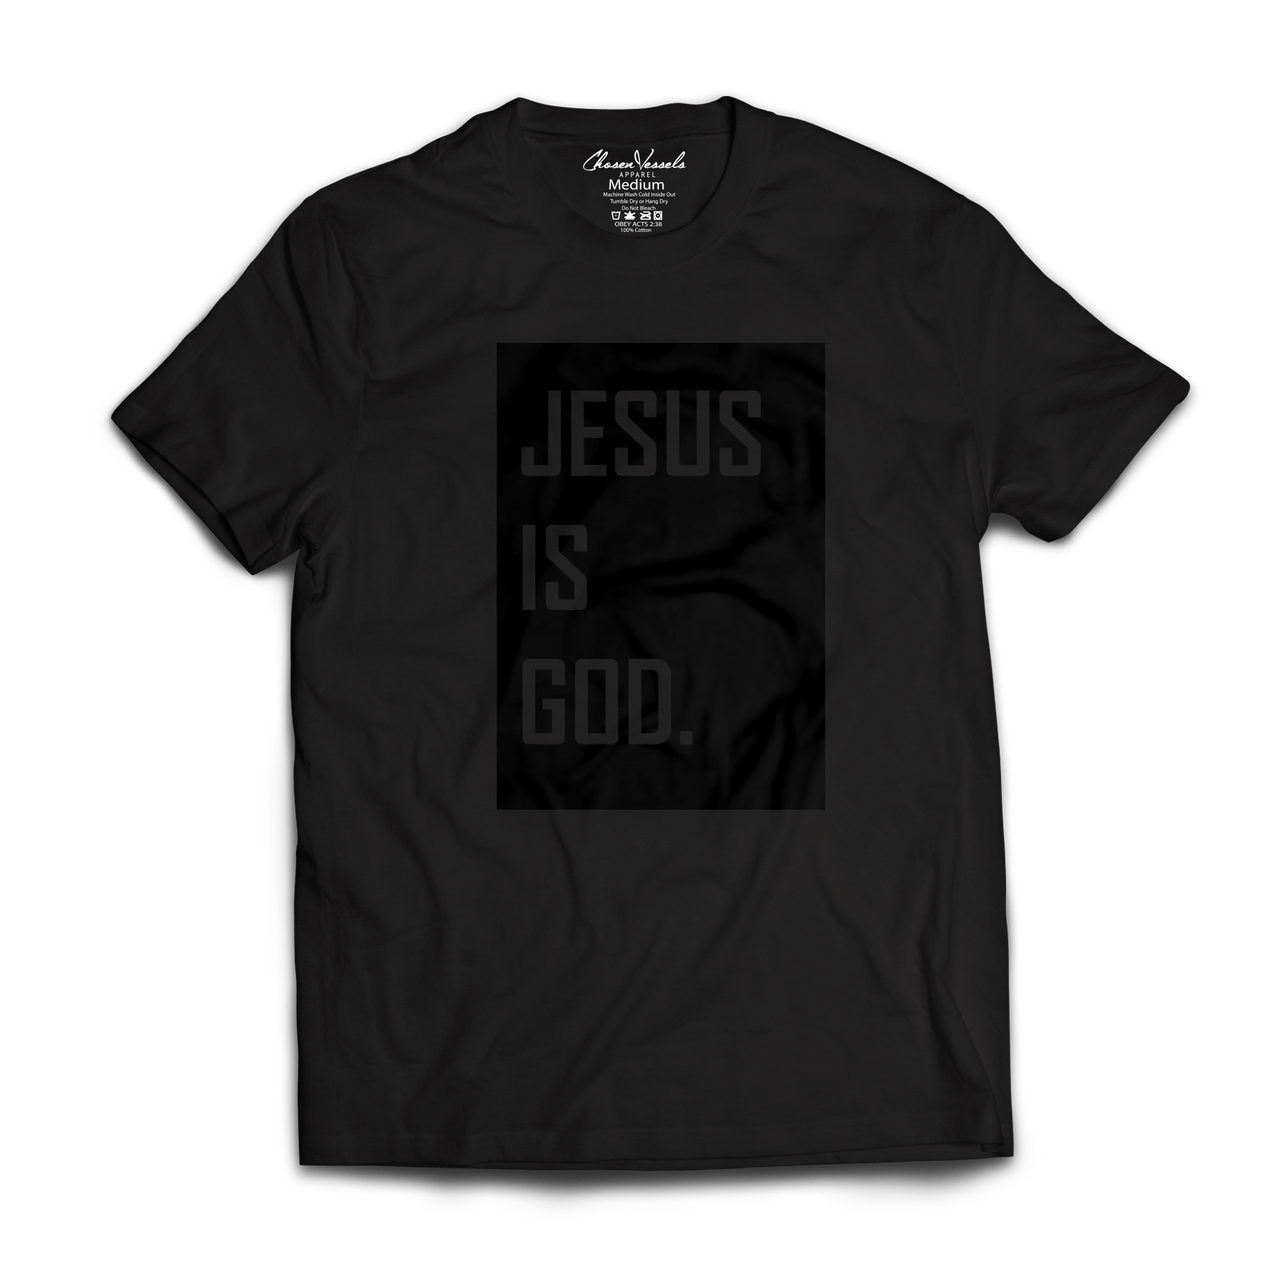 Jesus is God - Black on Black (Limited Edition)